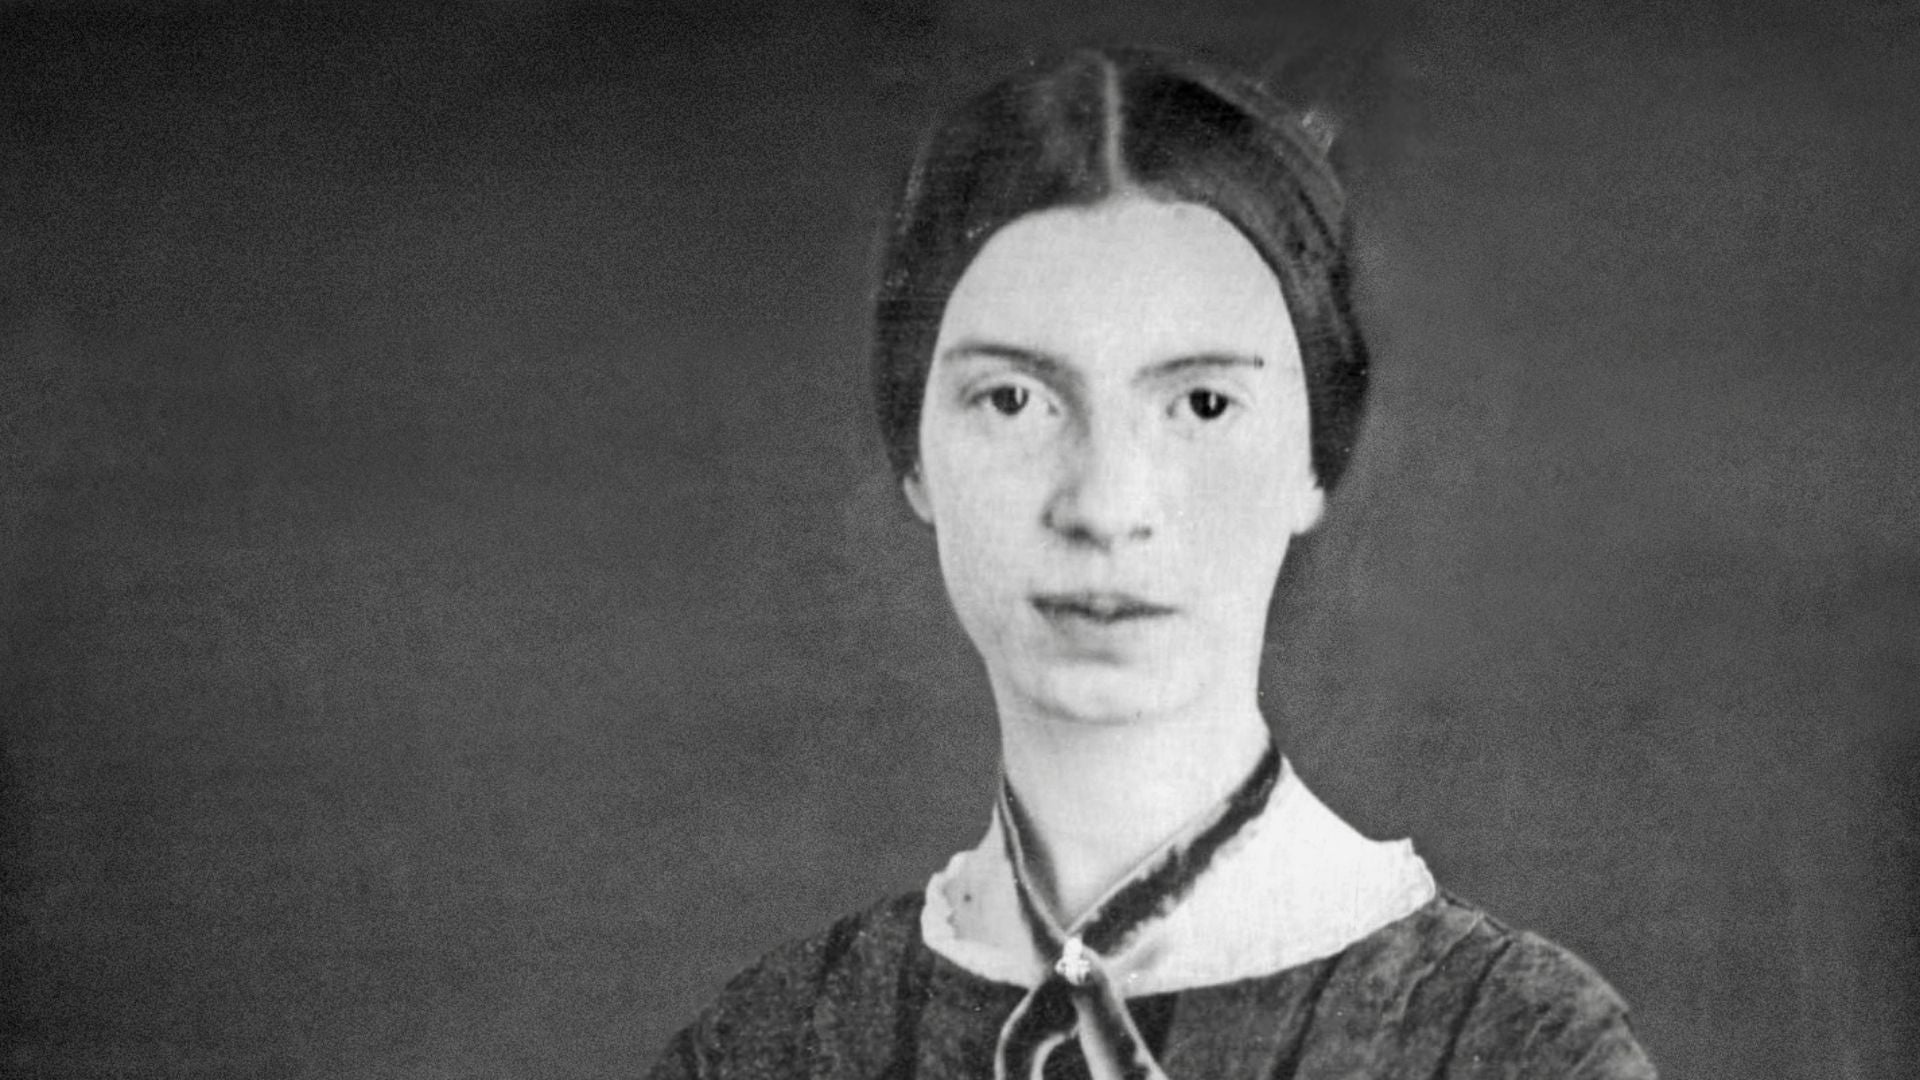 Emily Dickinson: American Poet